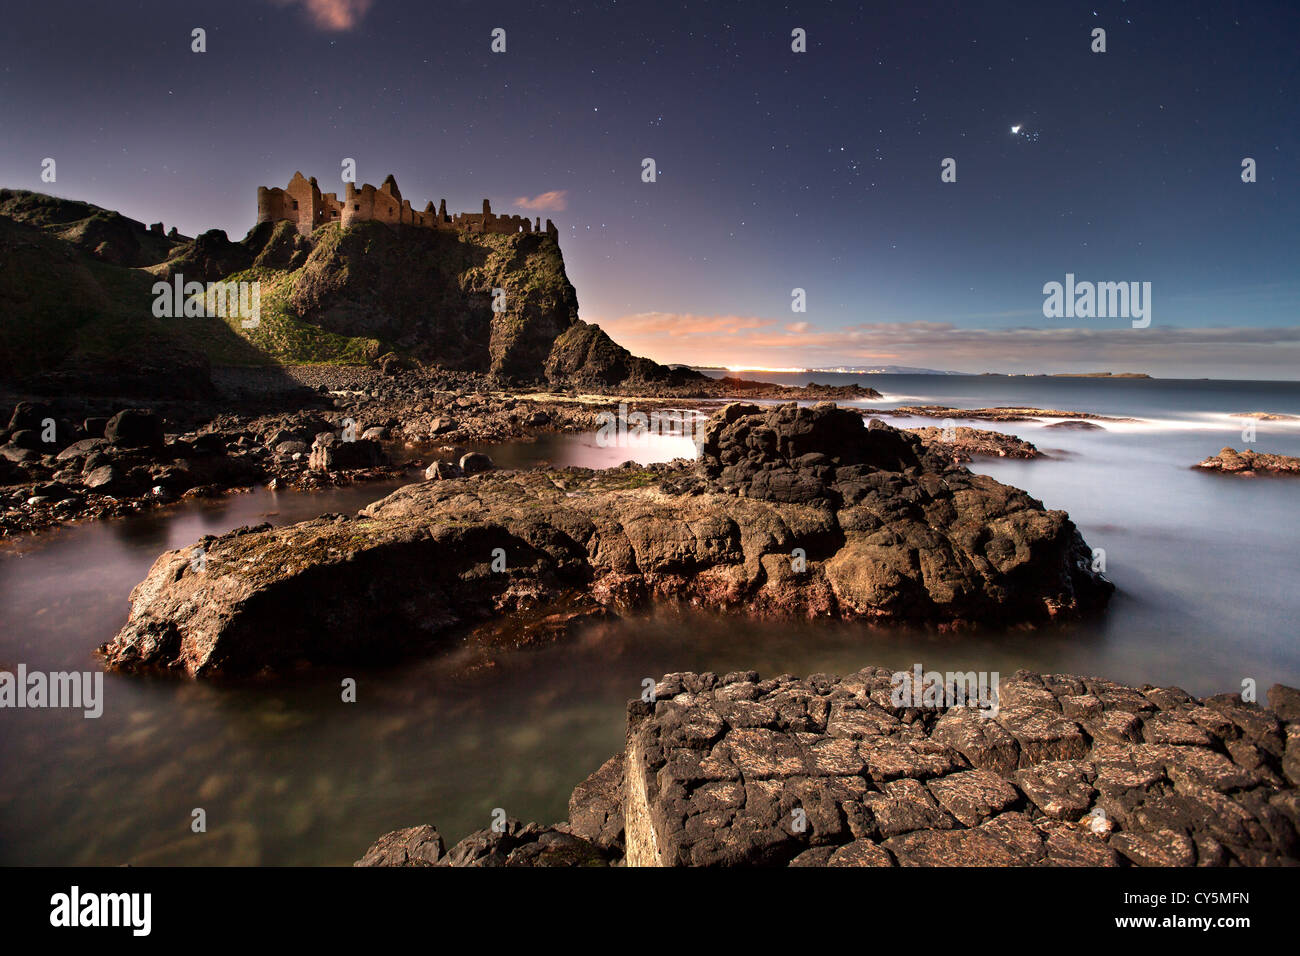 Dunluce Castle captured at night under moonlight. Stock Photo